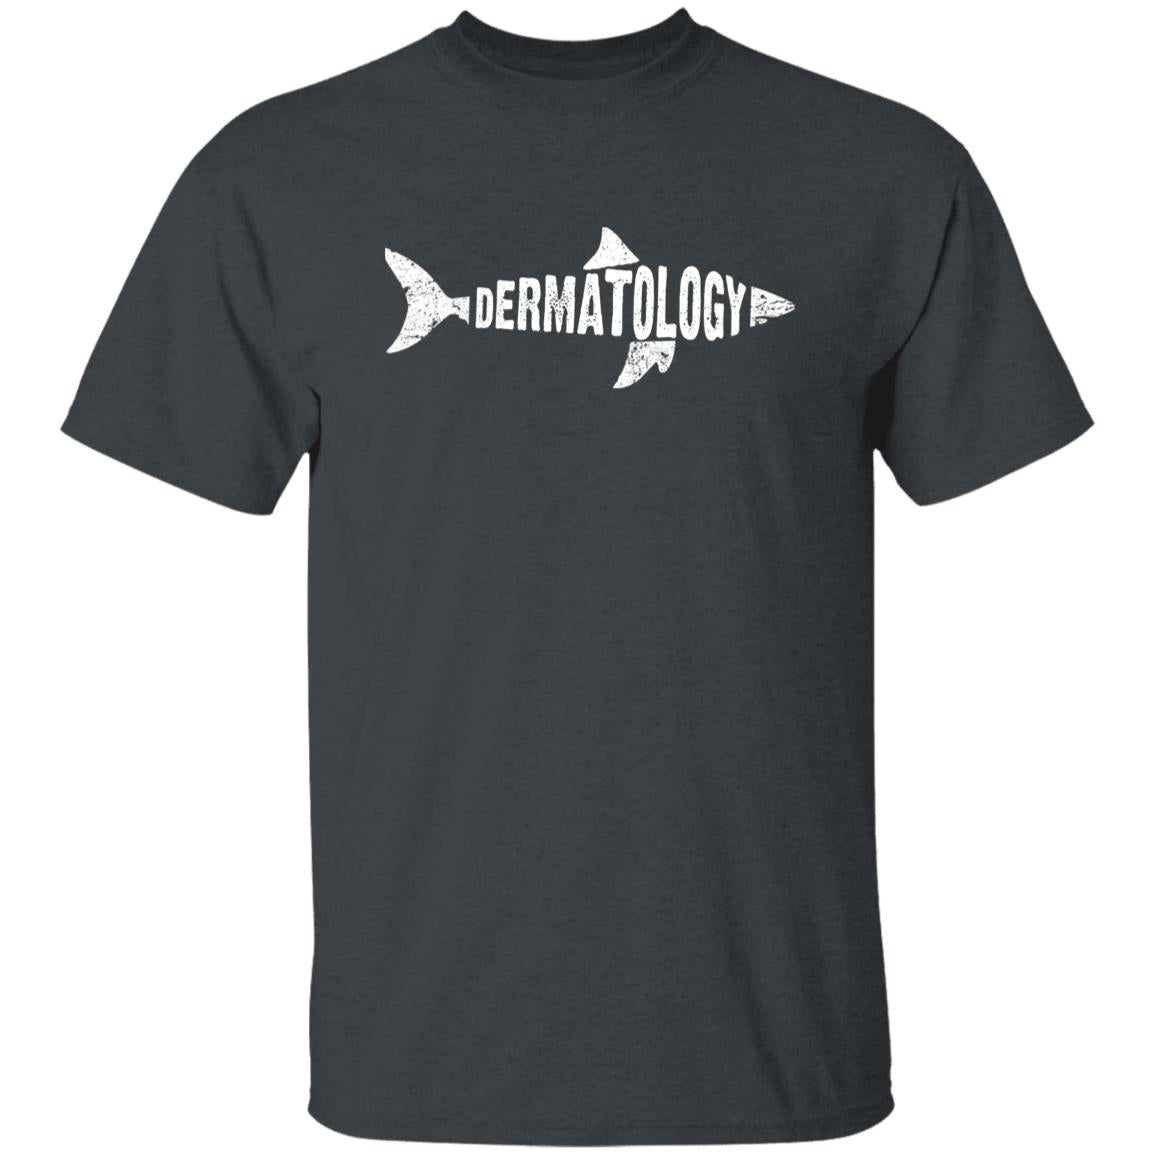 Dermatology Shark T-Shirt Derm squad Dermatology nurse Florida Unisex Tee Black Navy Dark Heather-Family-Gift-Planet